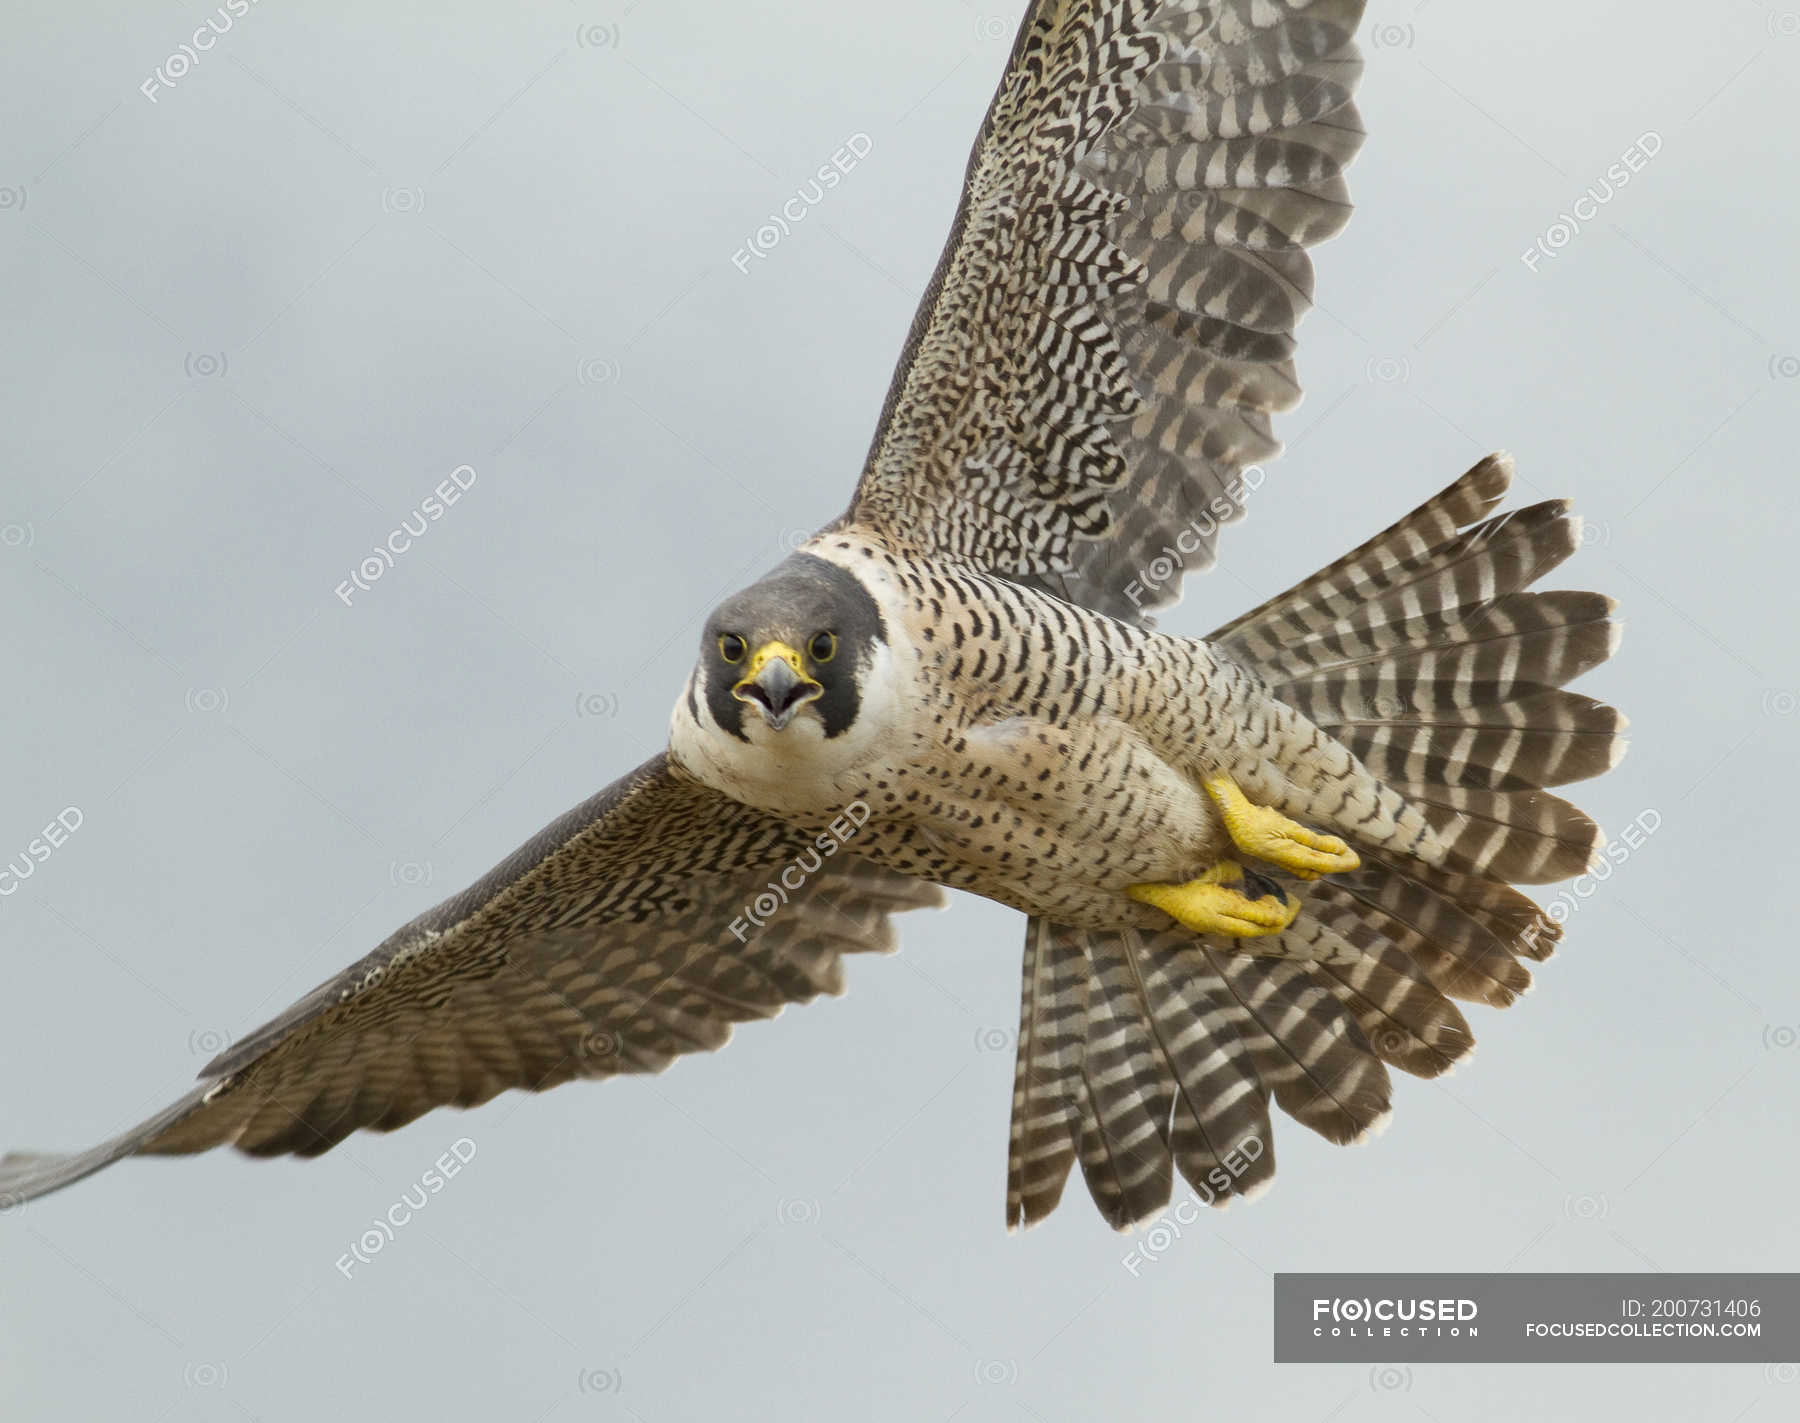 peregrin falcon flying